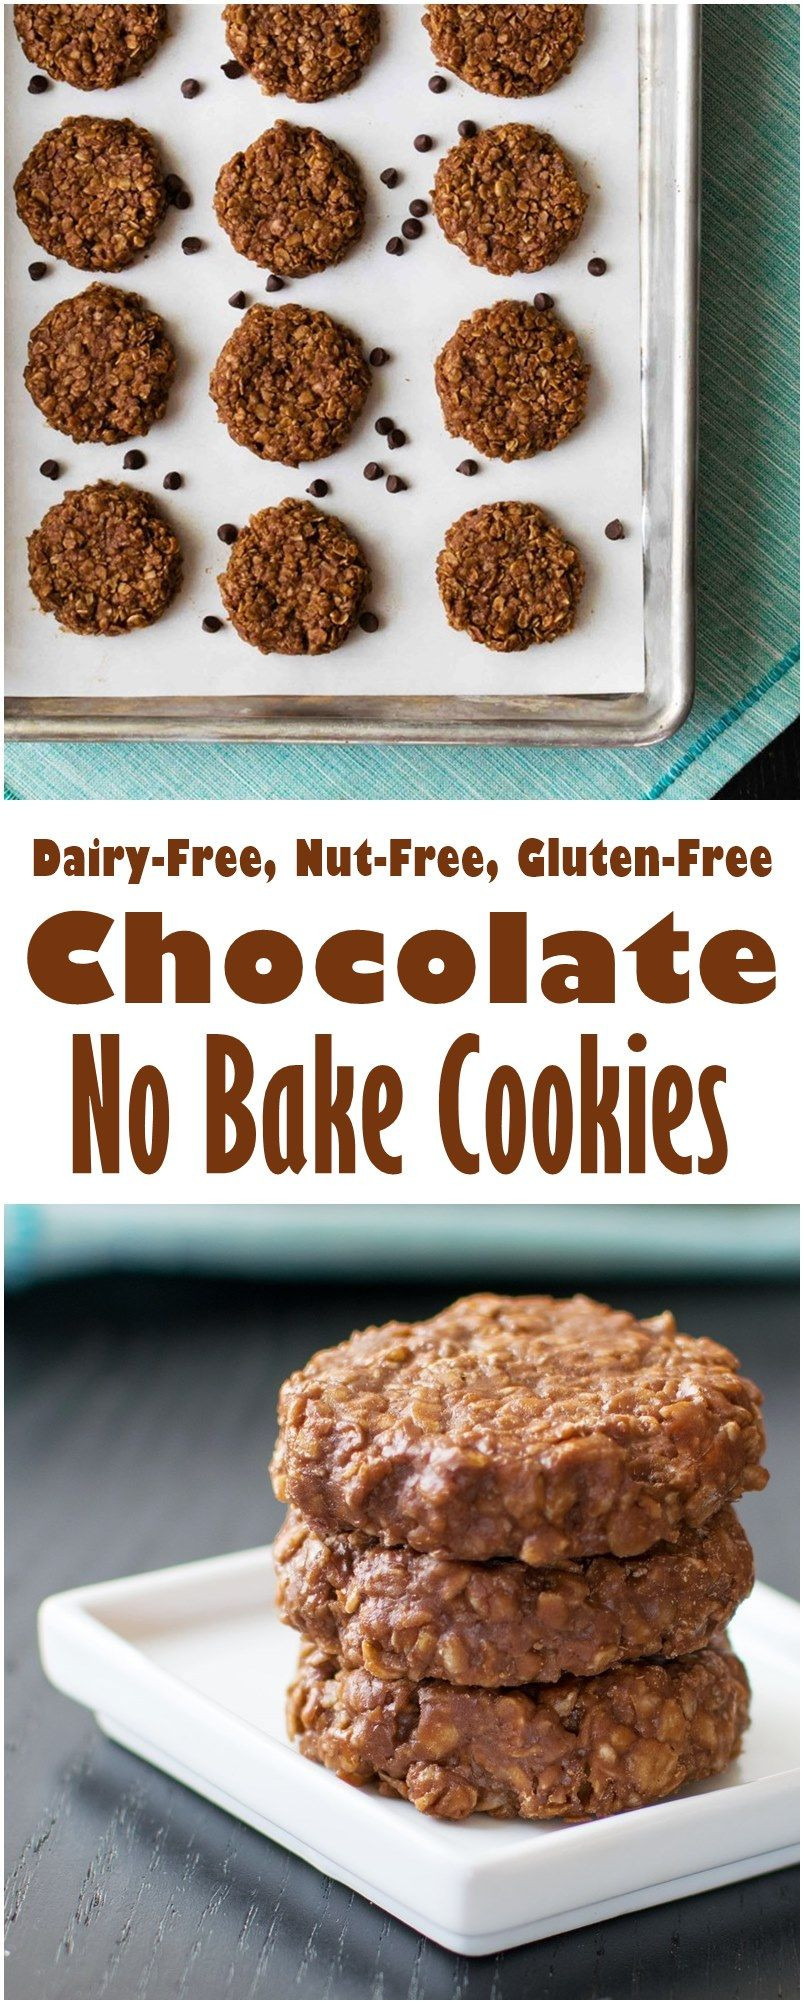 Gluten Free Dairy Free No Bake Cookies
 Dairy Free Chocolate No Bake Cookies Recipe